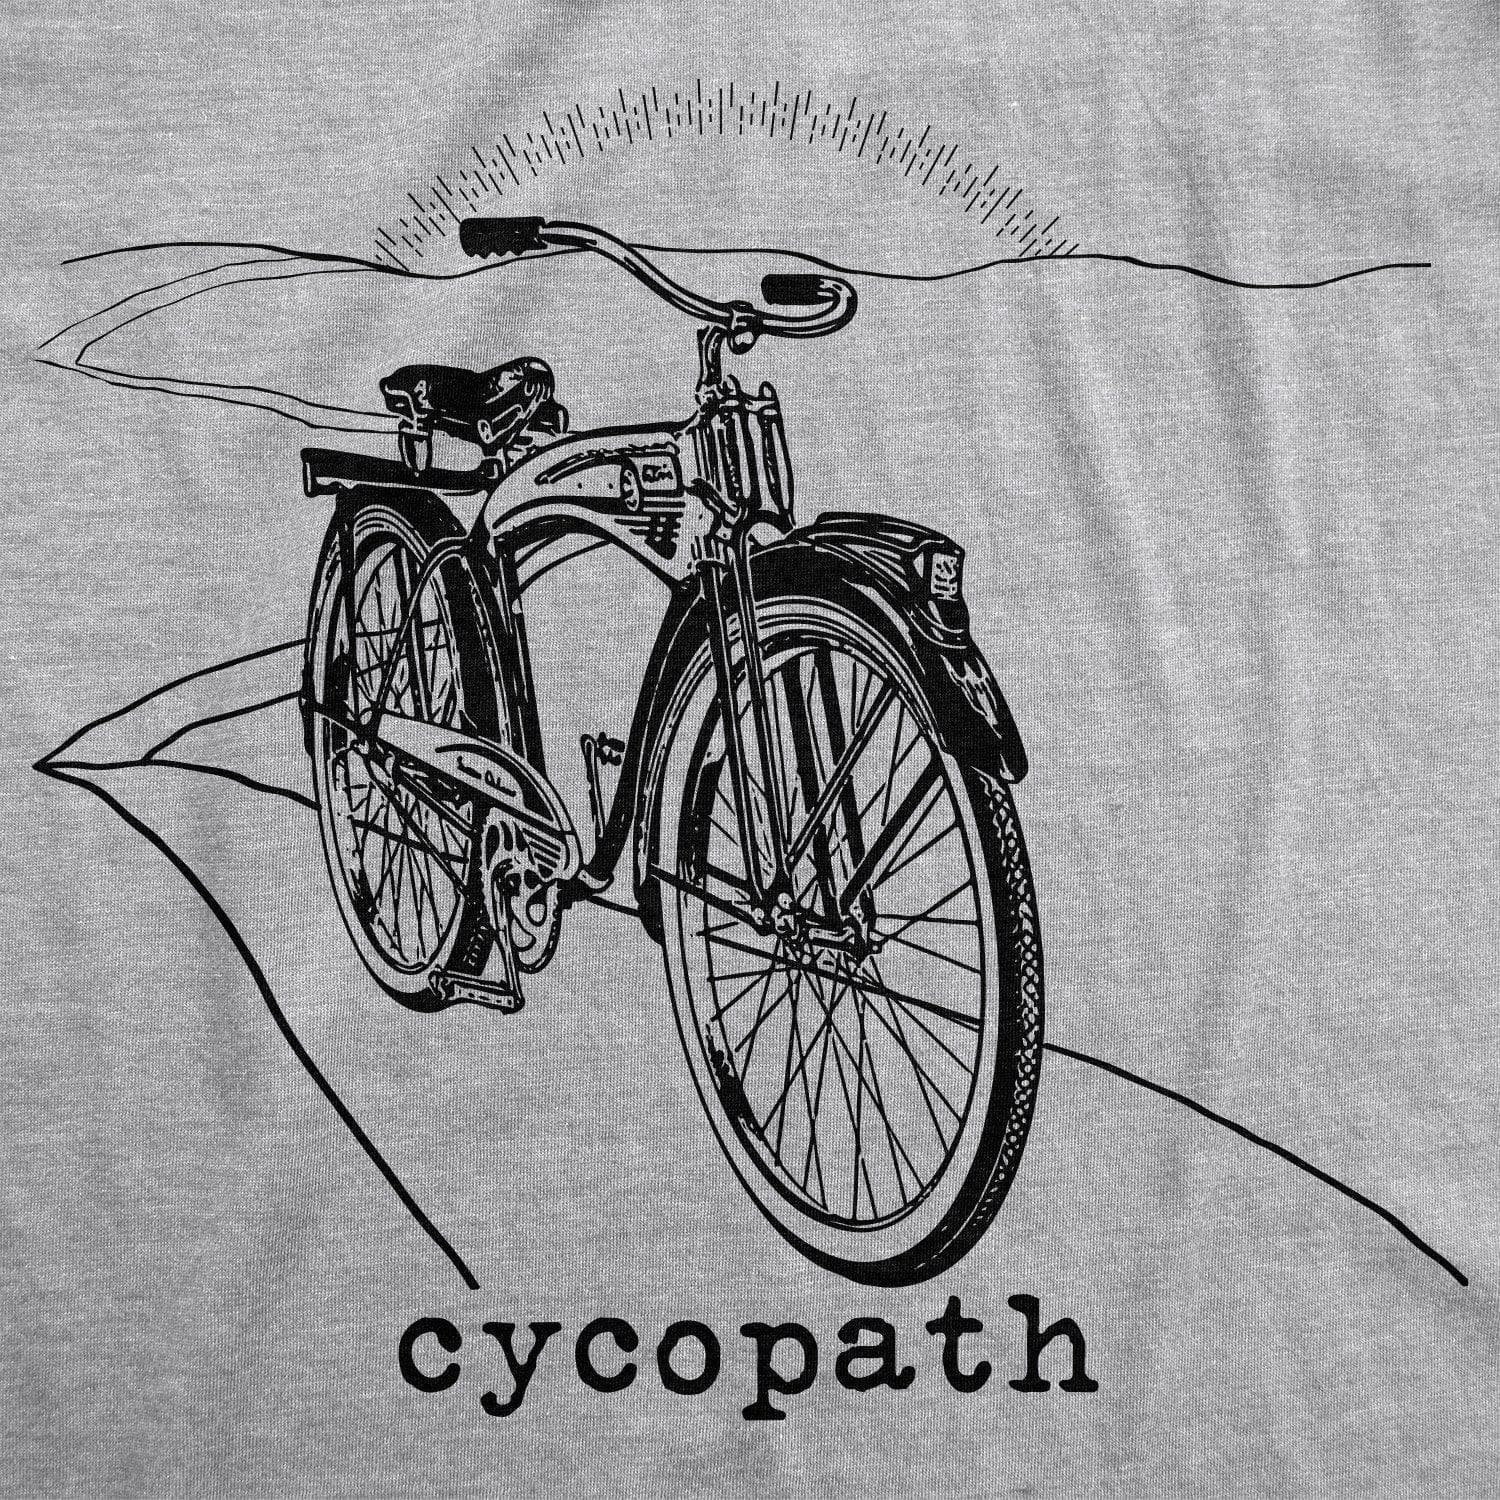 Cycopath Men's Tshirt - Crazy Dog T-Shirts